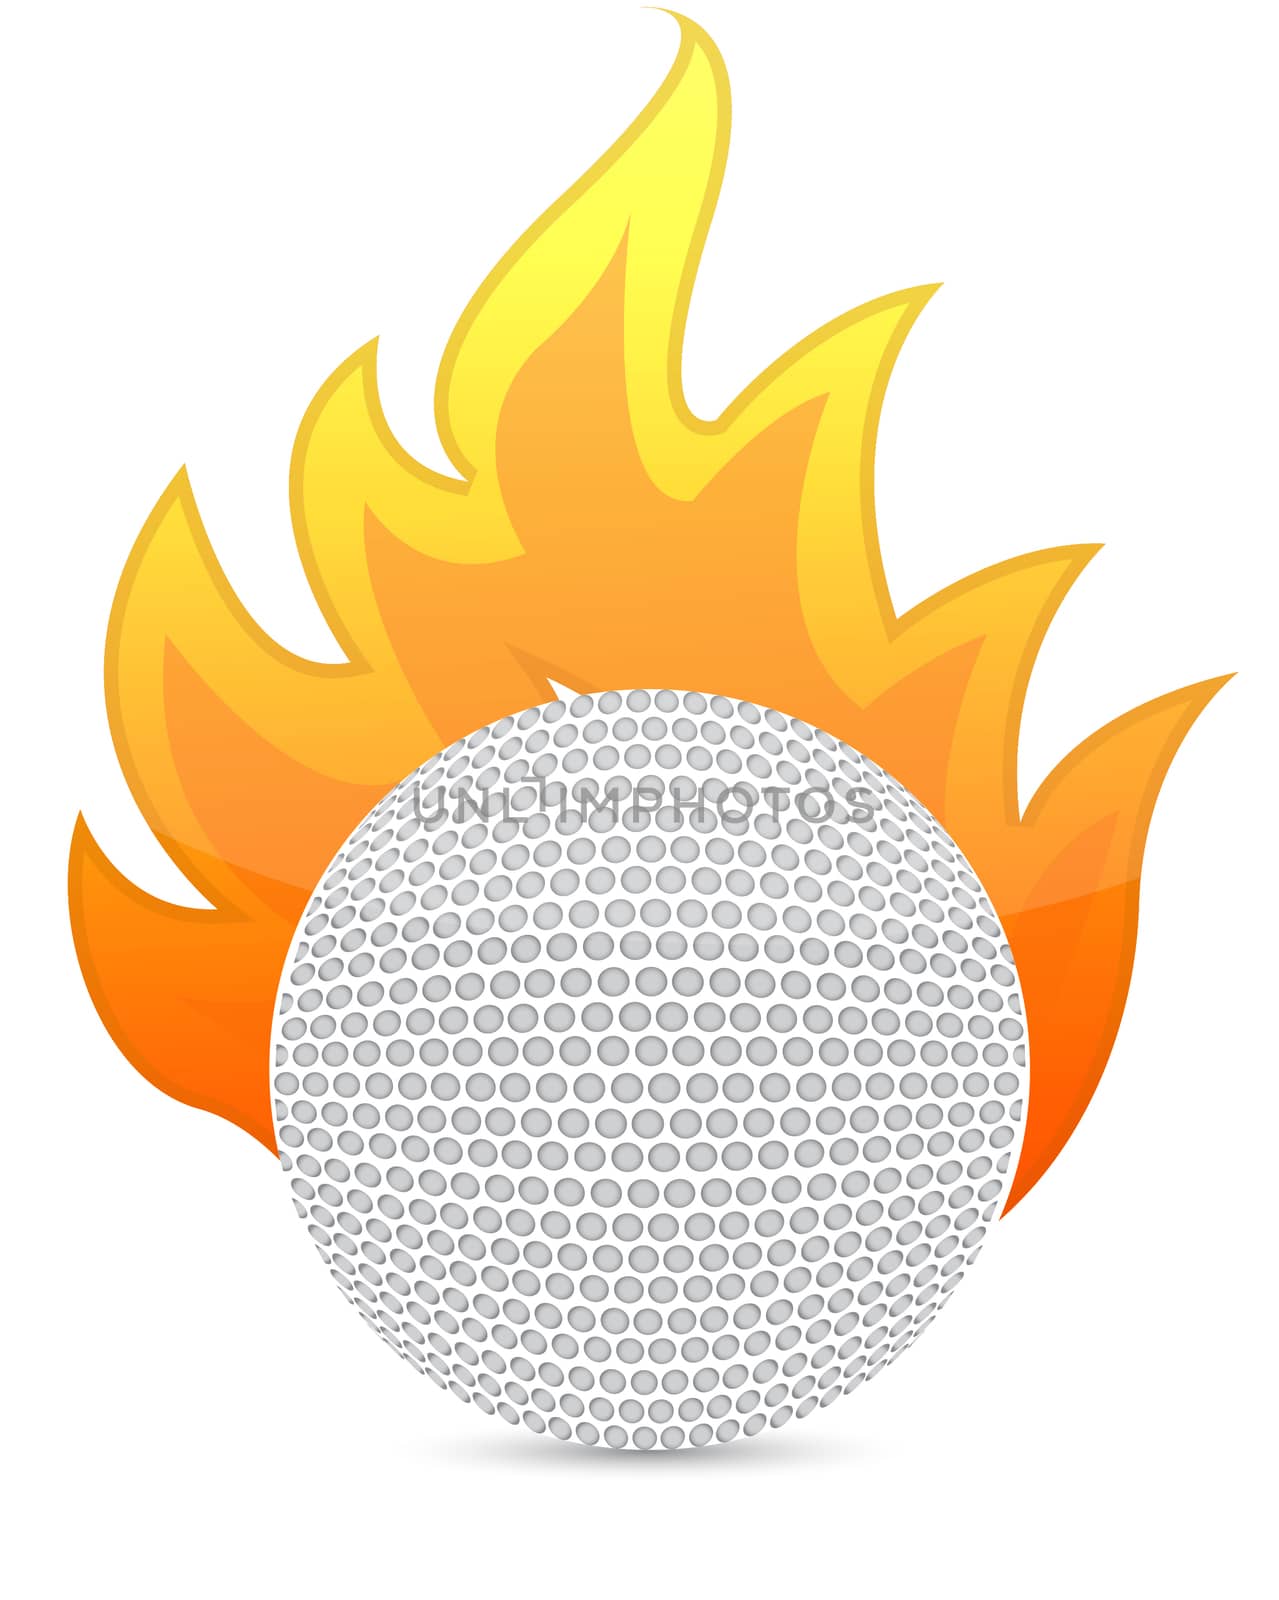 Golf Ball in fire illustration design